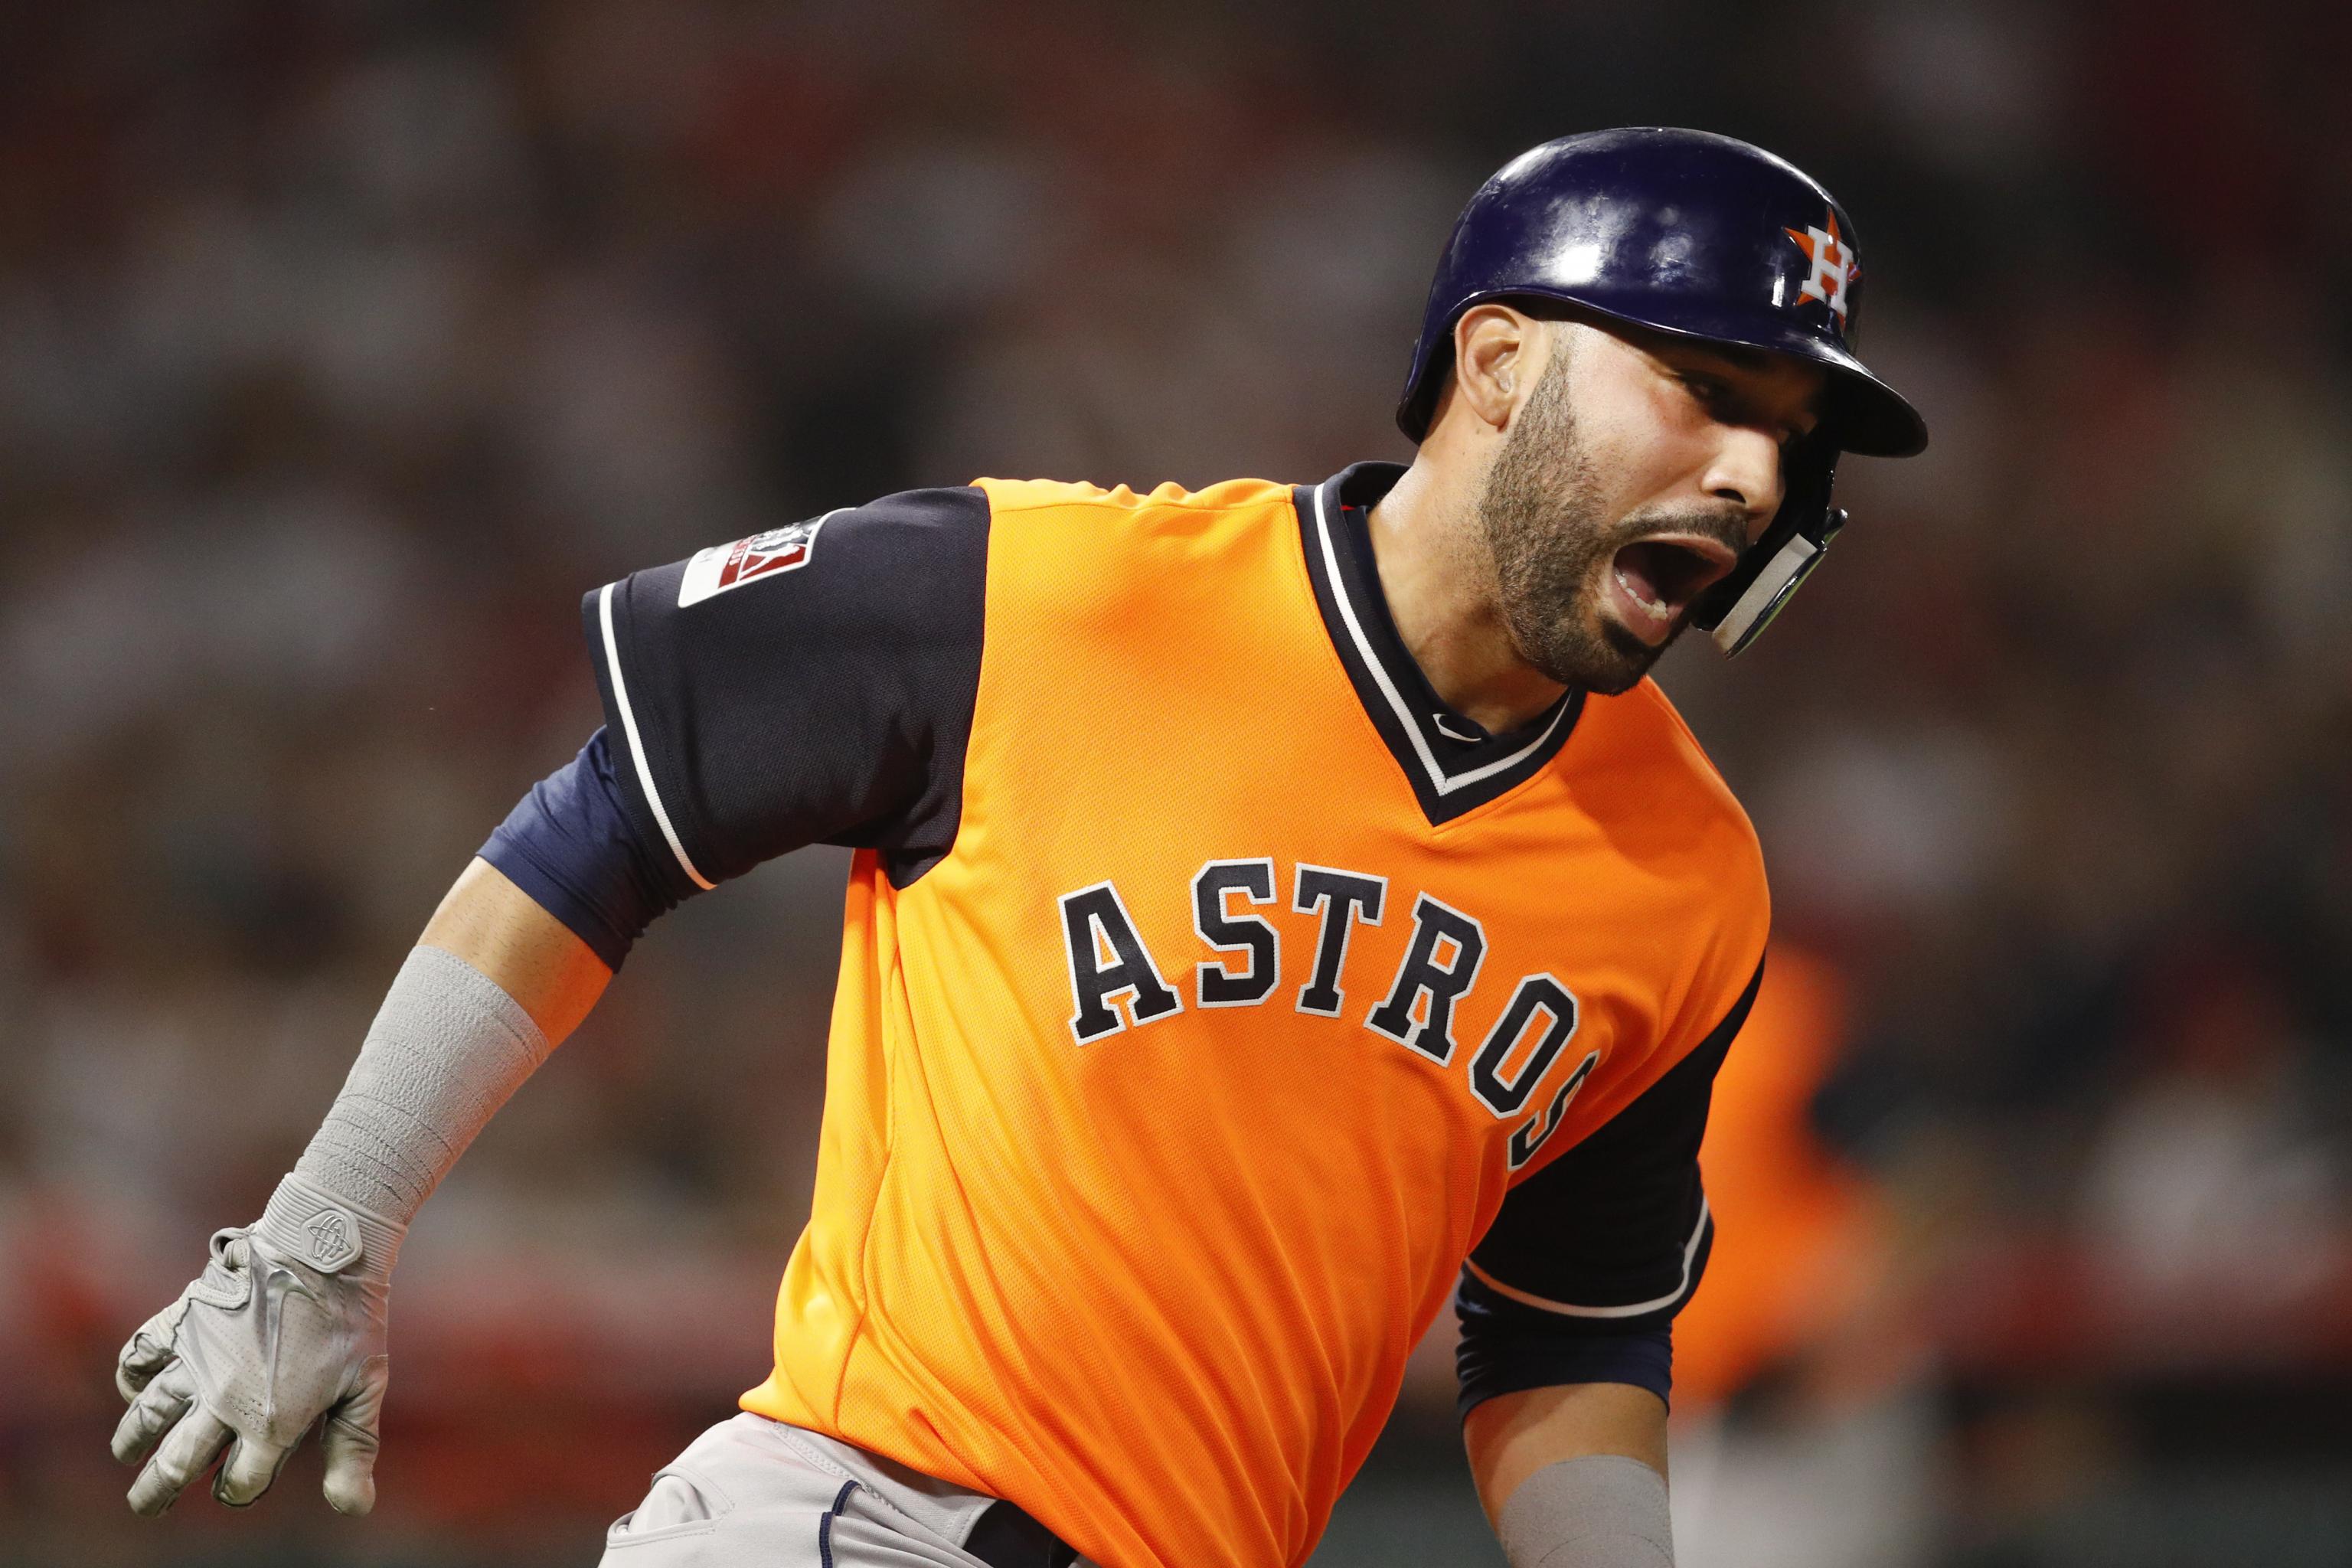 Changes in offseason program a boost for Astros' Springer